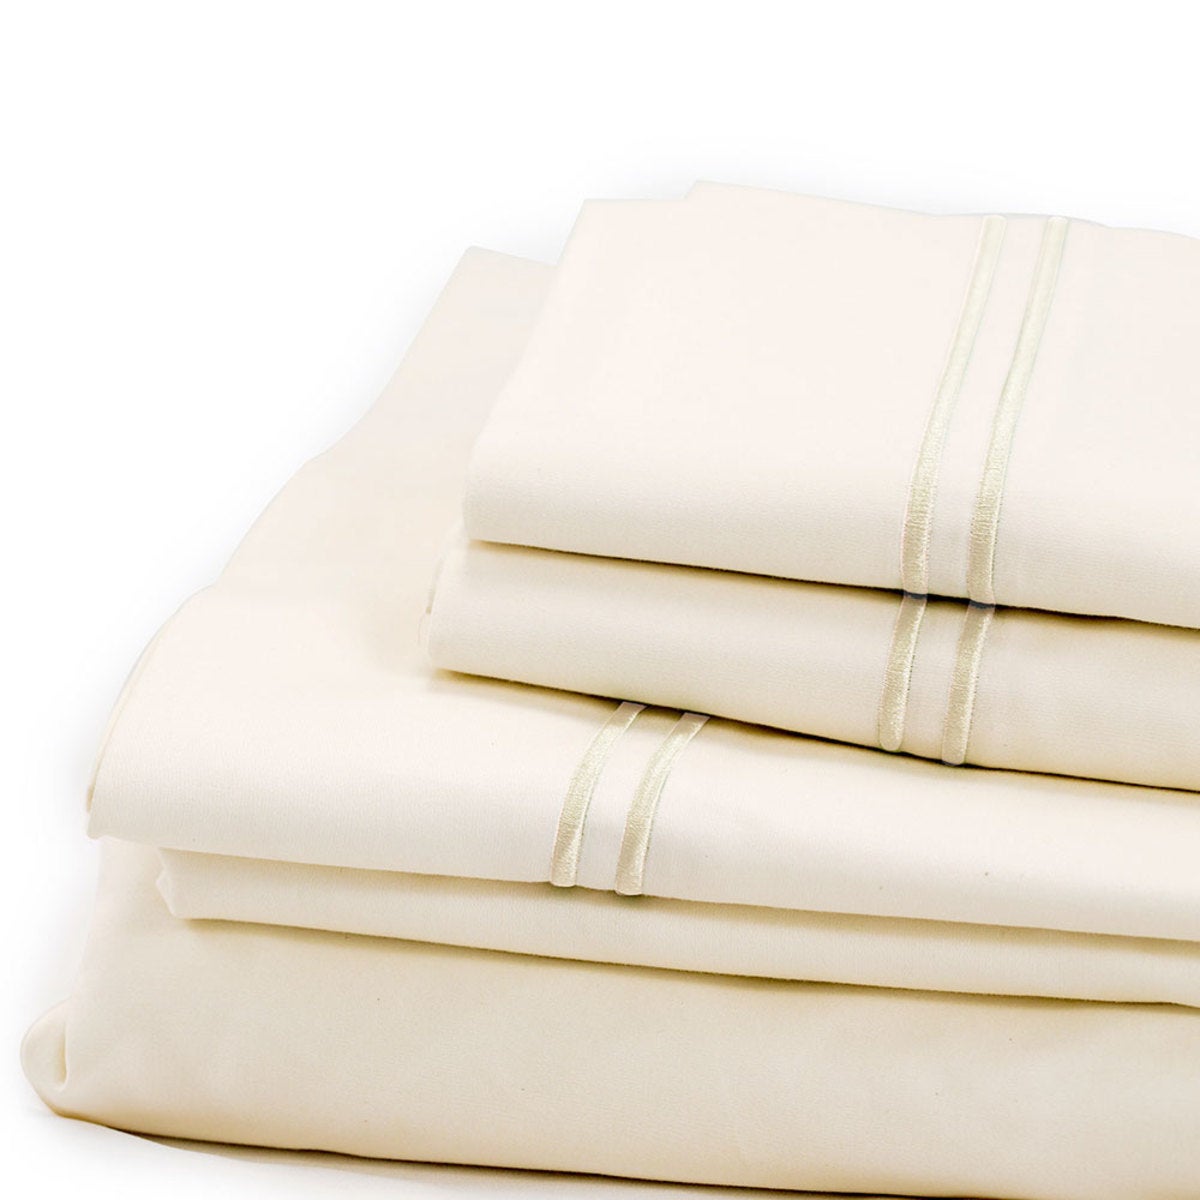 500 Thread Count Sateen Satin Stitch King Sheet Set - White, Ivory